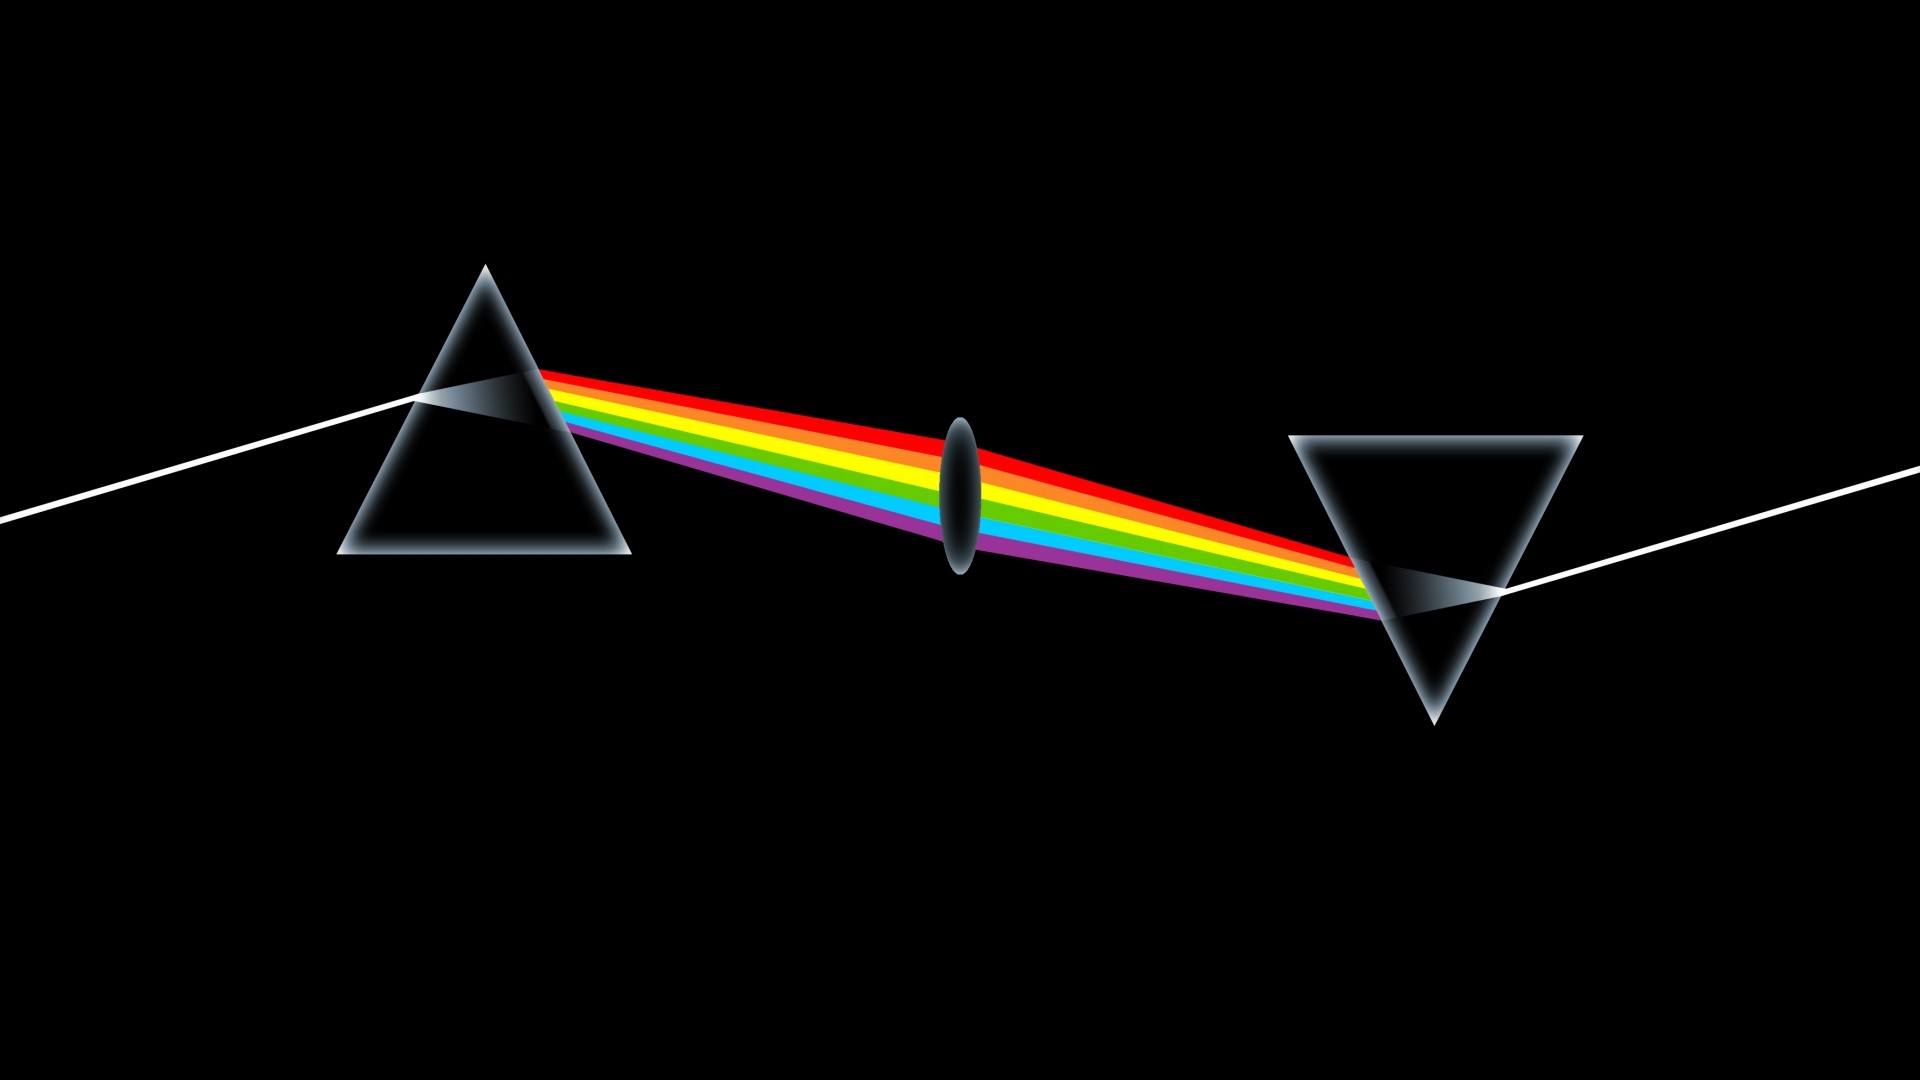 1920x1080 Pink Floyd hard rock classic retro bands groups album covers logo wallpaper  |  | 26111 | WallpaperUP